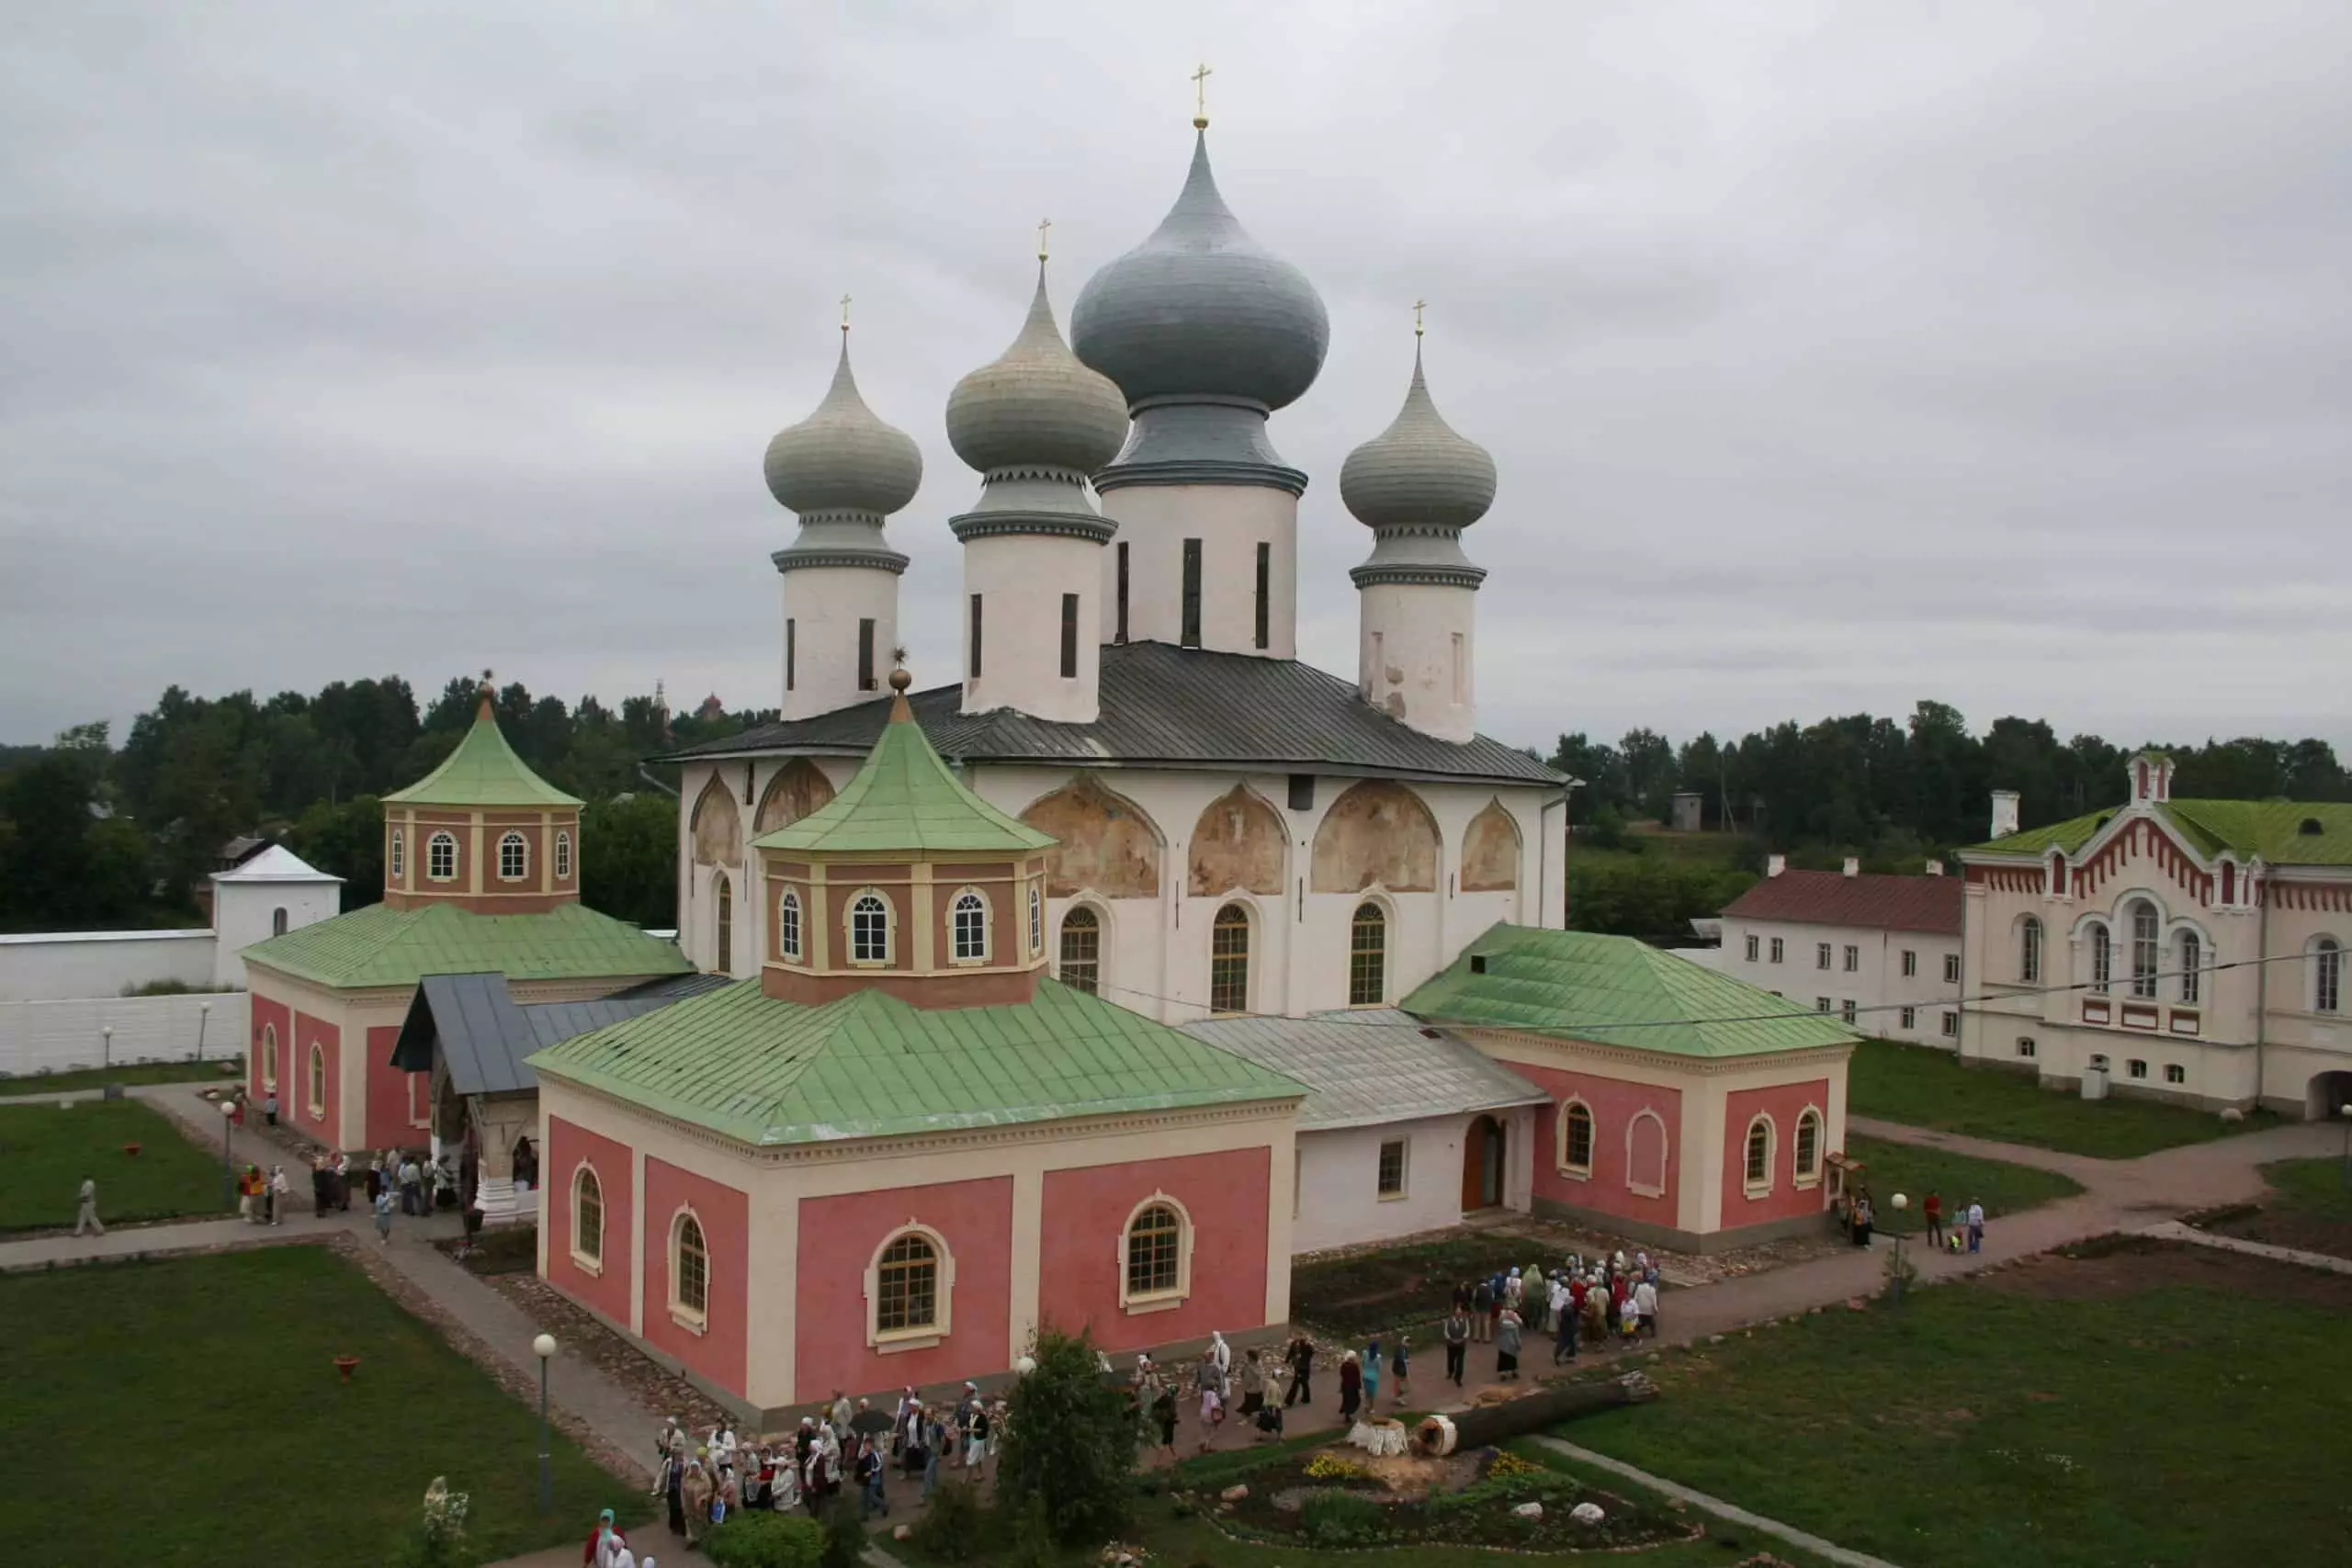 Tikhvinsky virginsky 가정 수도원